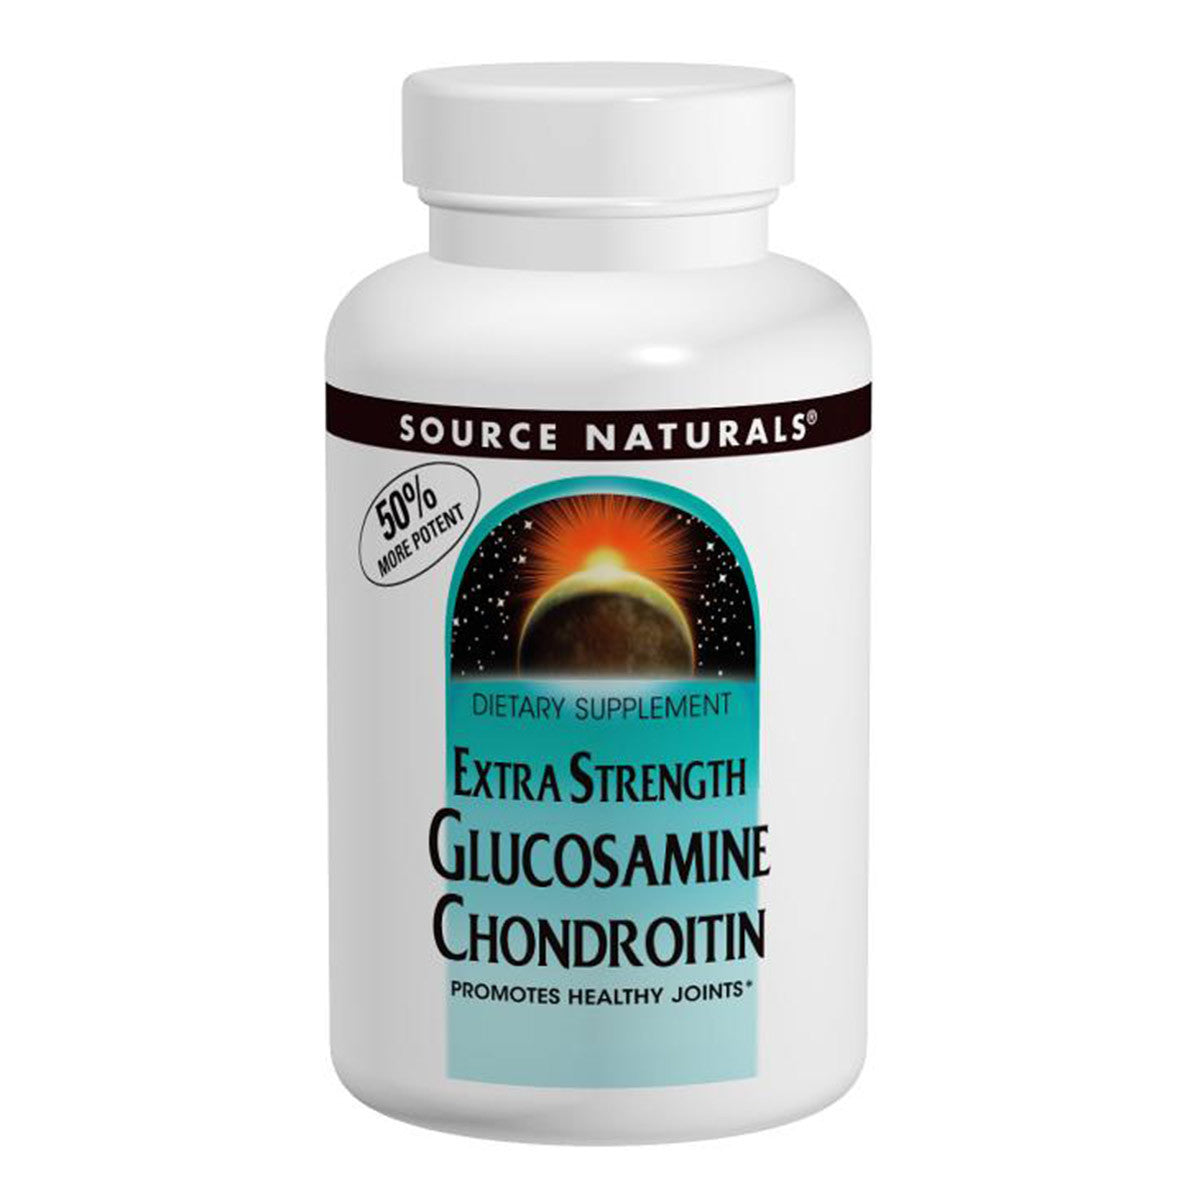 Primary image of Glucosamine/Chondroitin Extra Strength